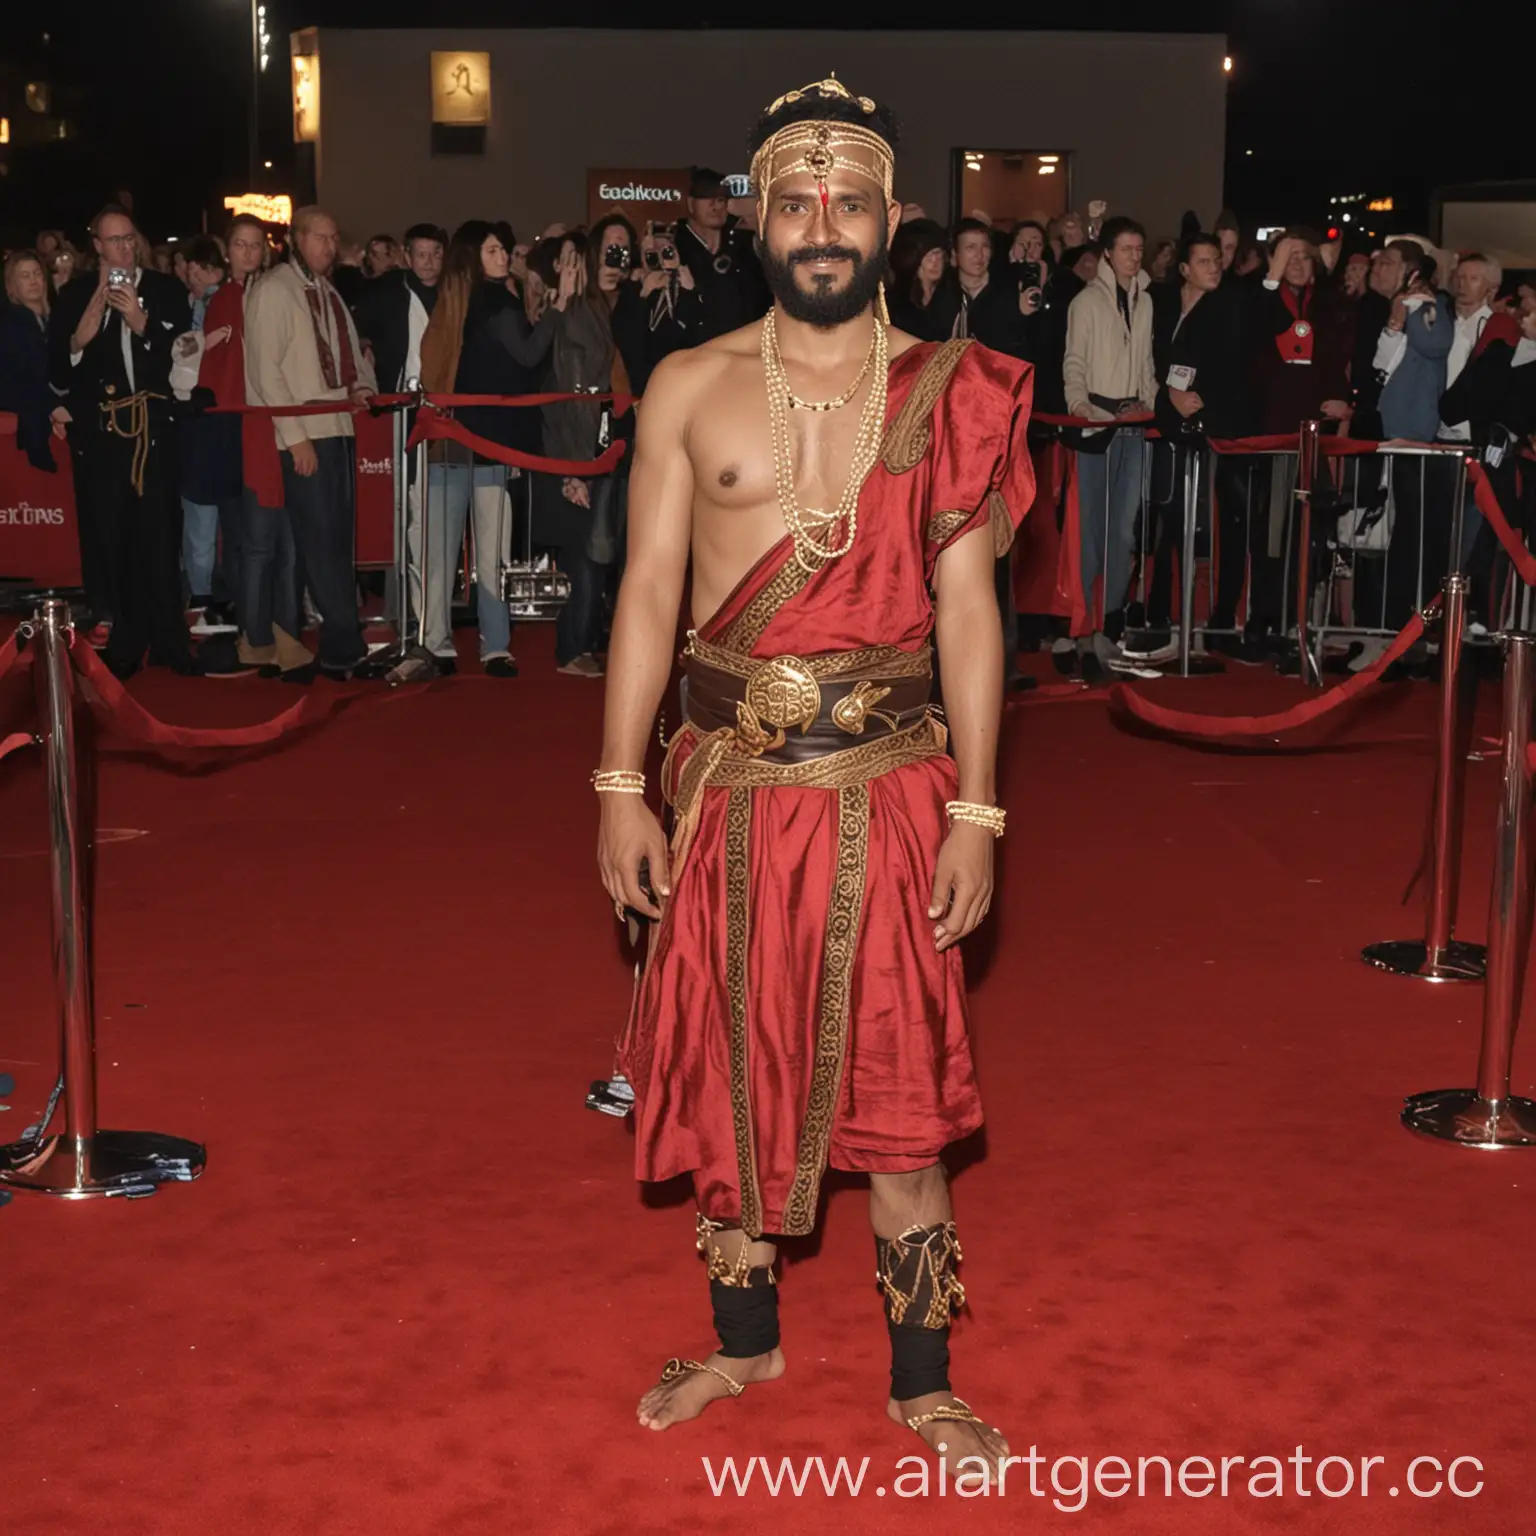 a man in a kunguru costume on the red carpet